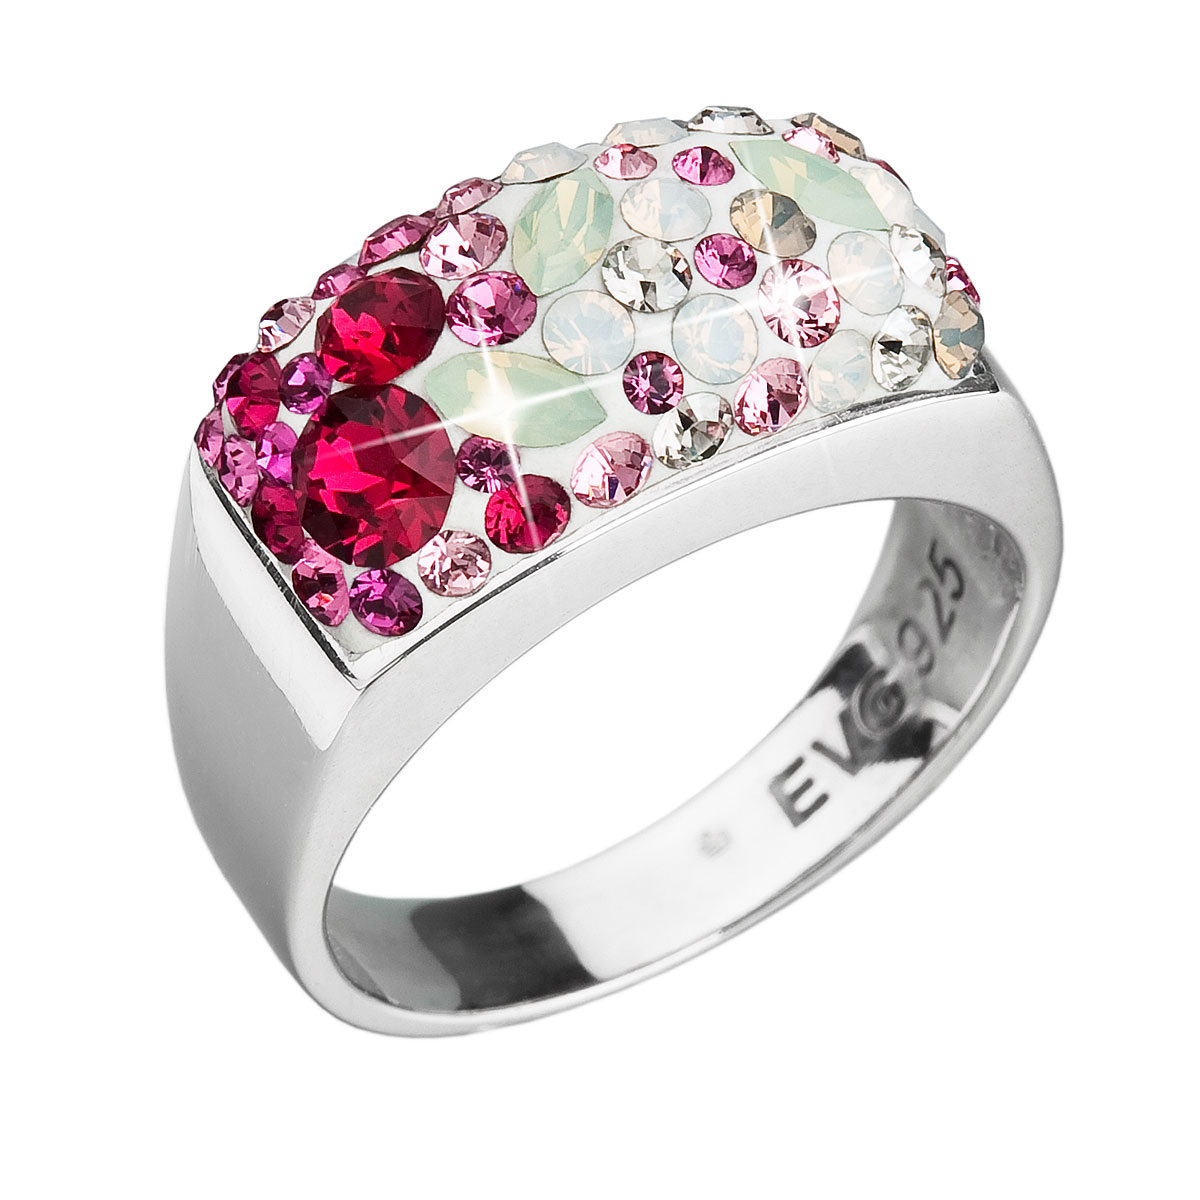 Evolution Group Stříbrný prsten s krystaly Swarovski mix barev červené 35014.3 sweet love